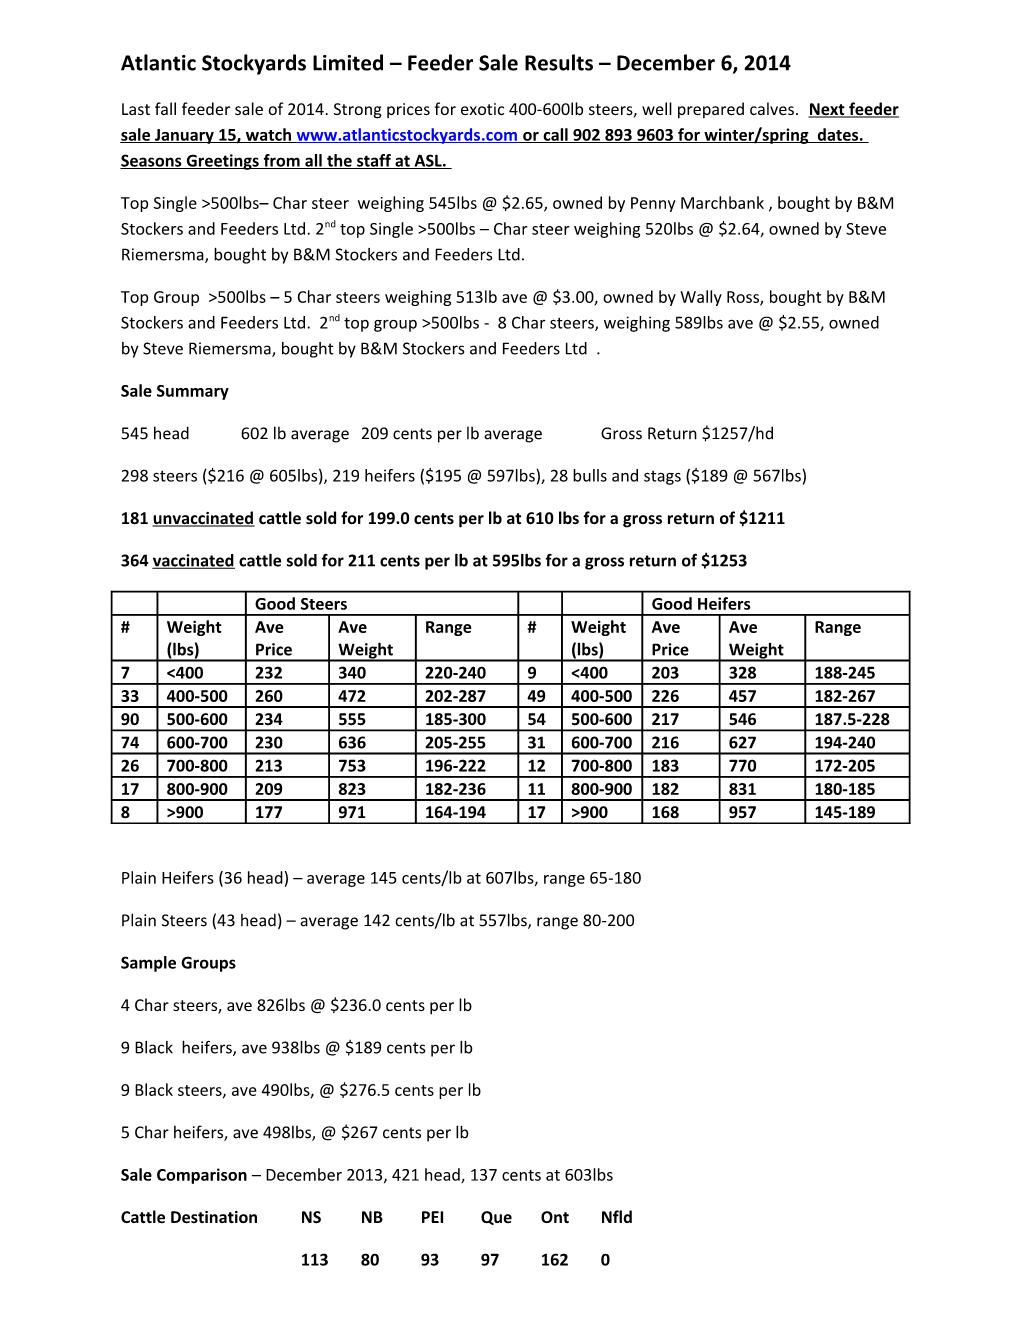 Atlantic Stockyards Limited Feeder Sale Results December 6, 2014